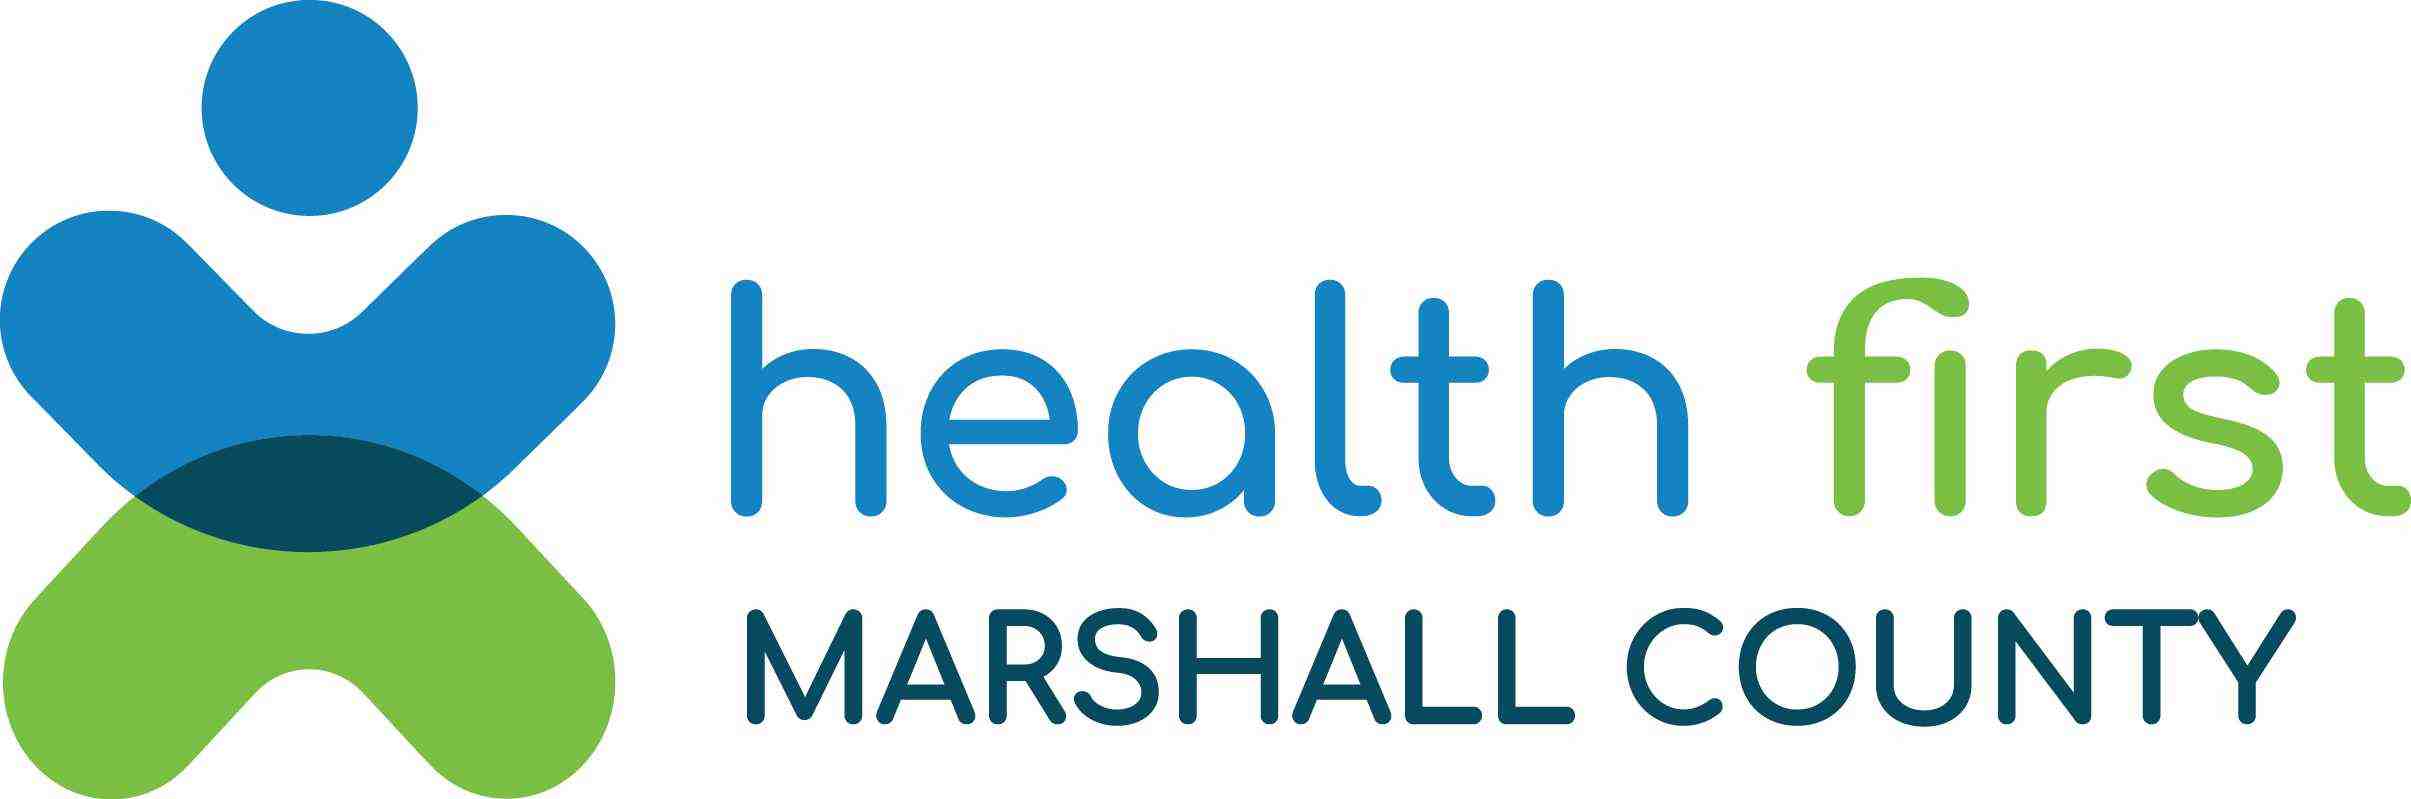 health first marshall county logo